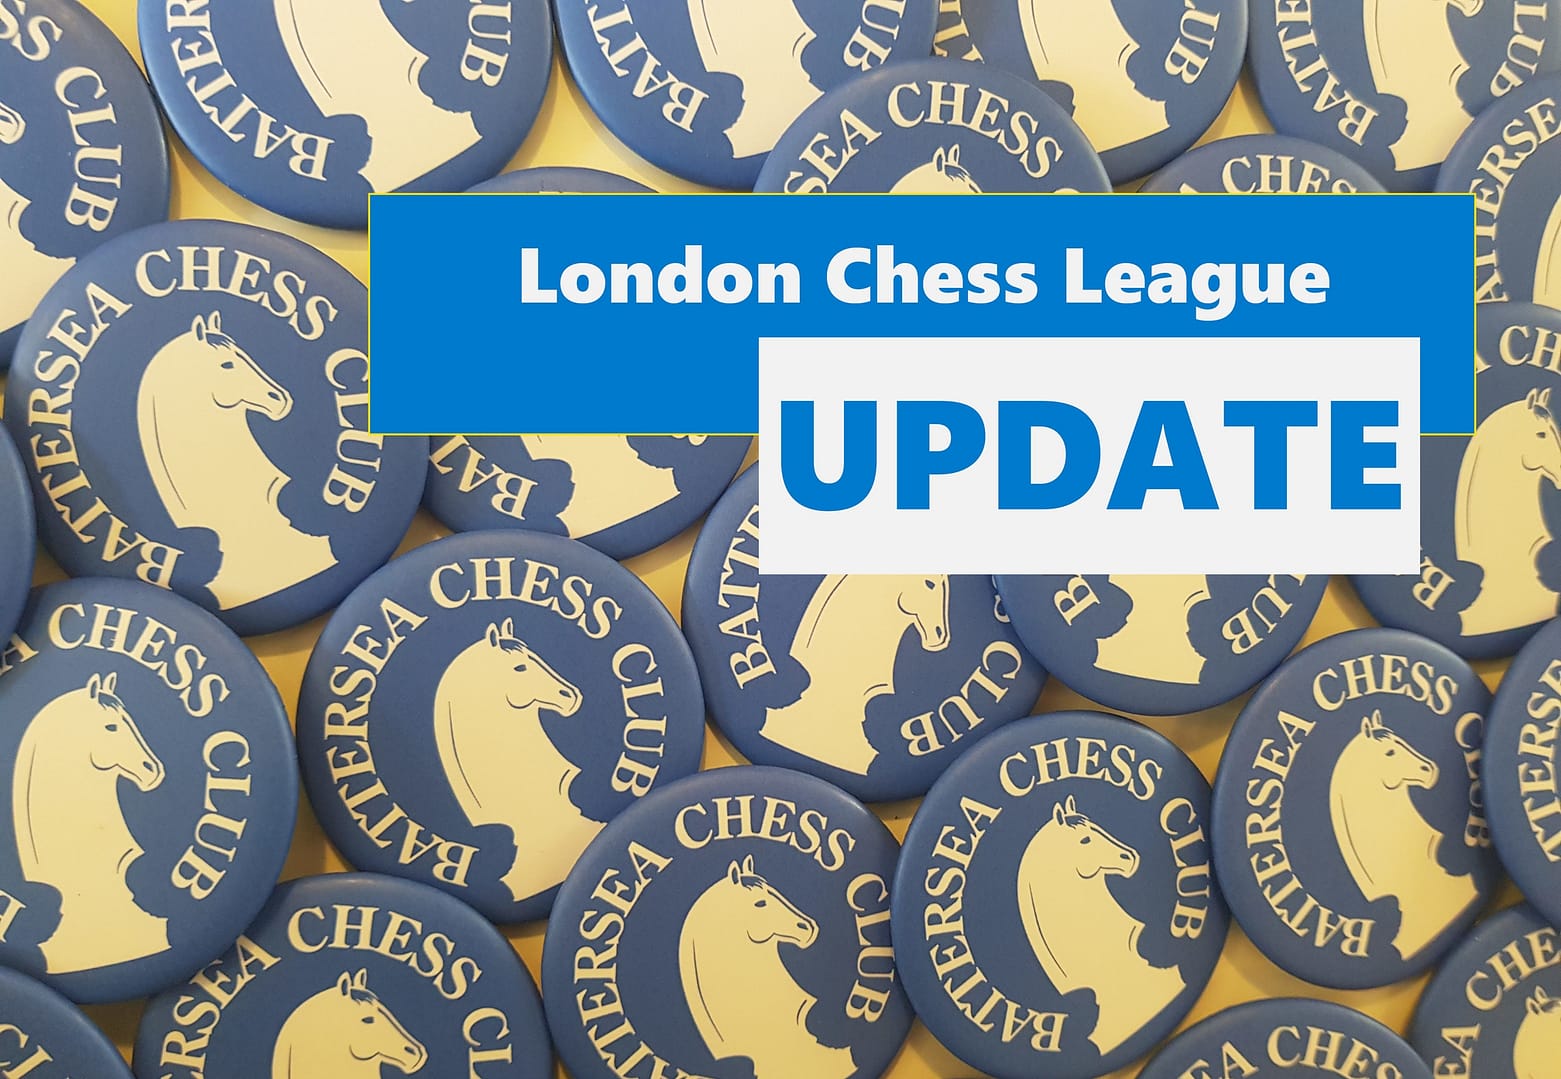 London Chess League update